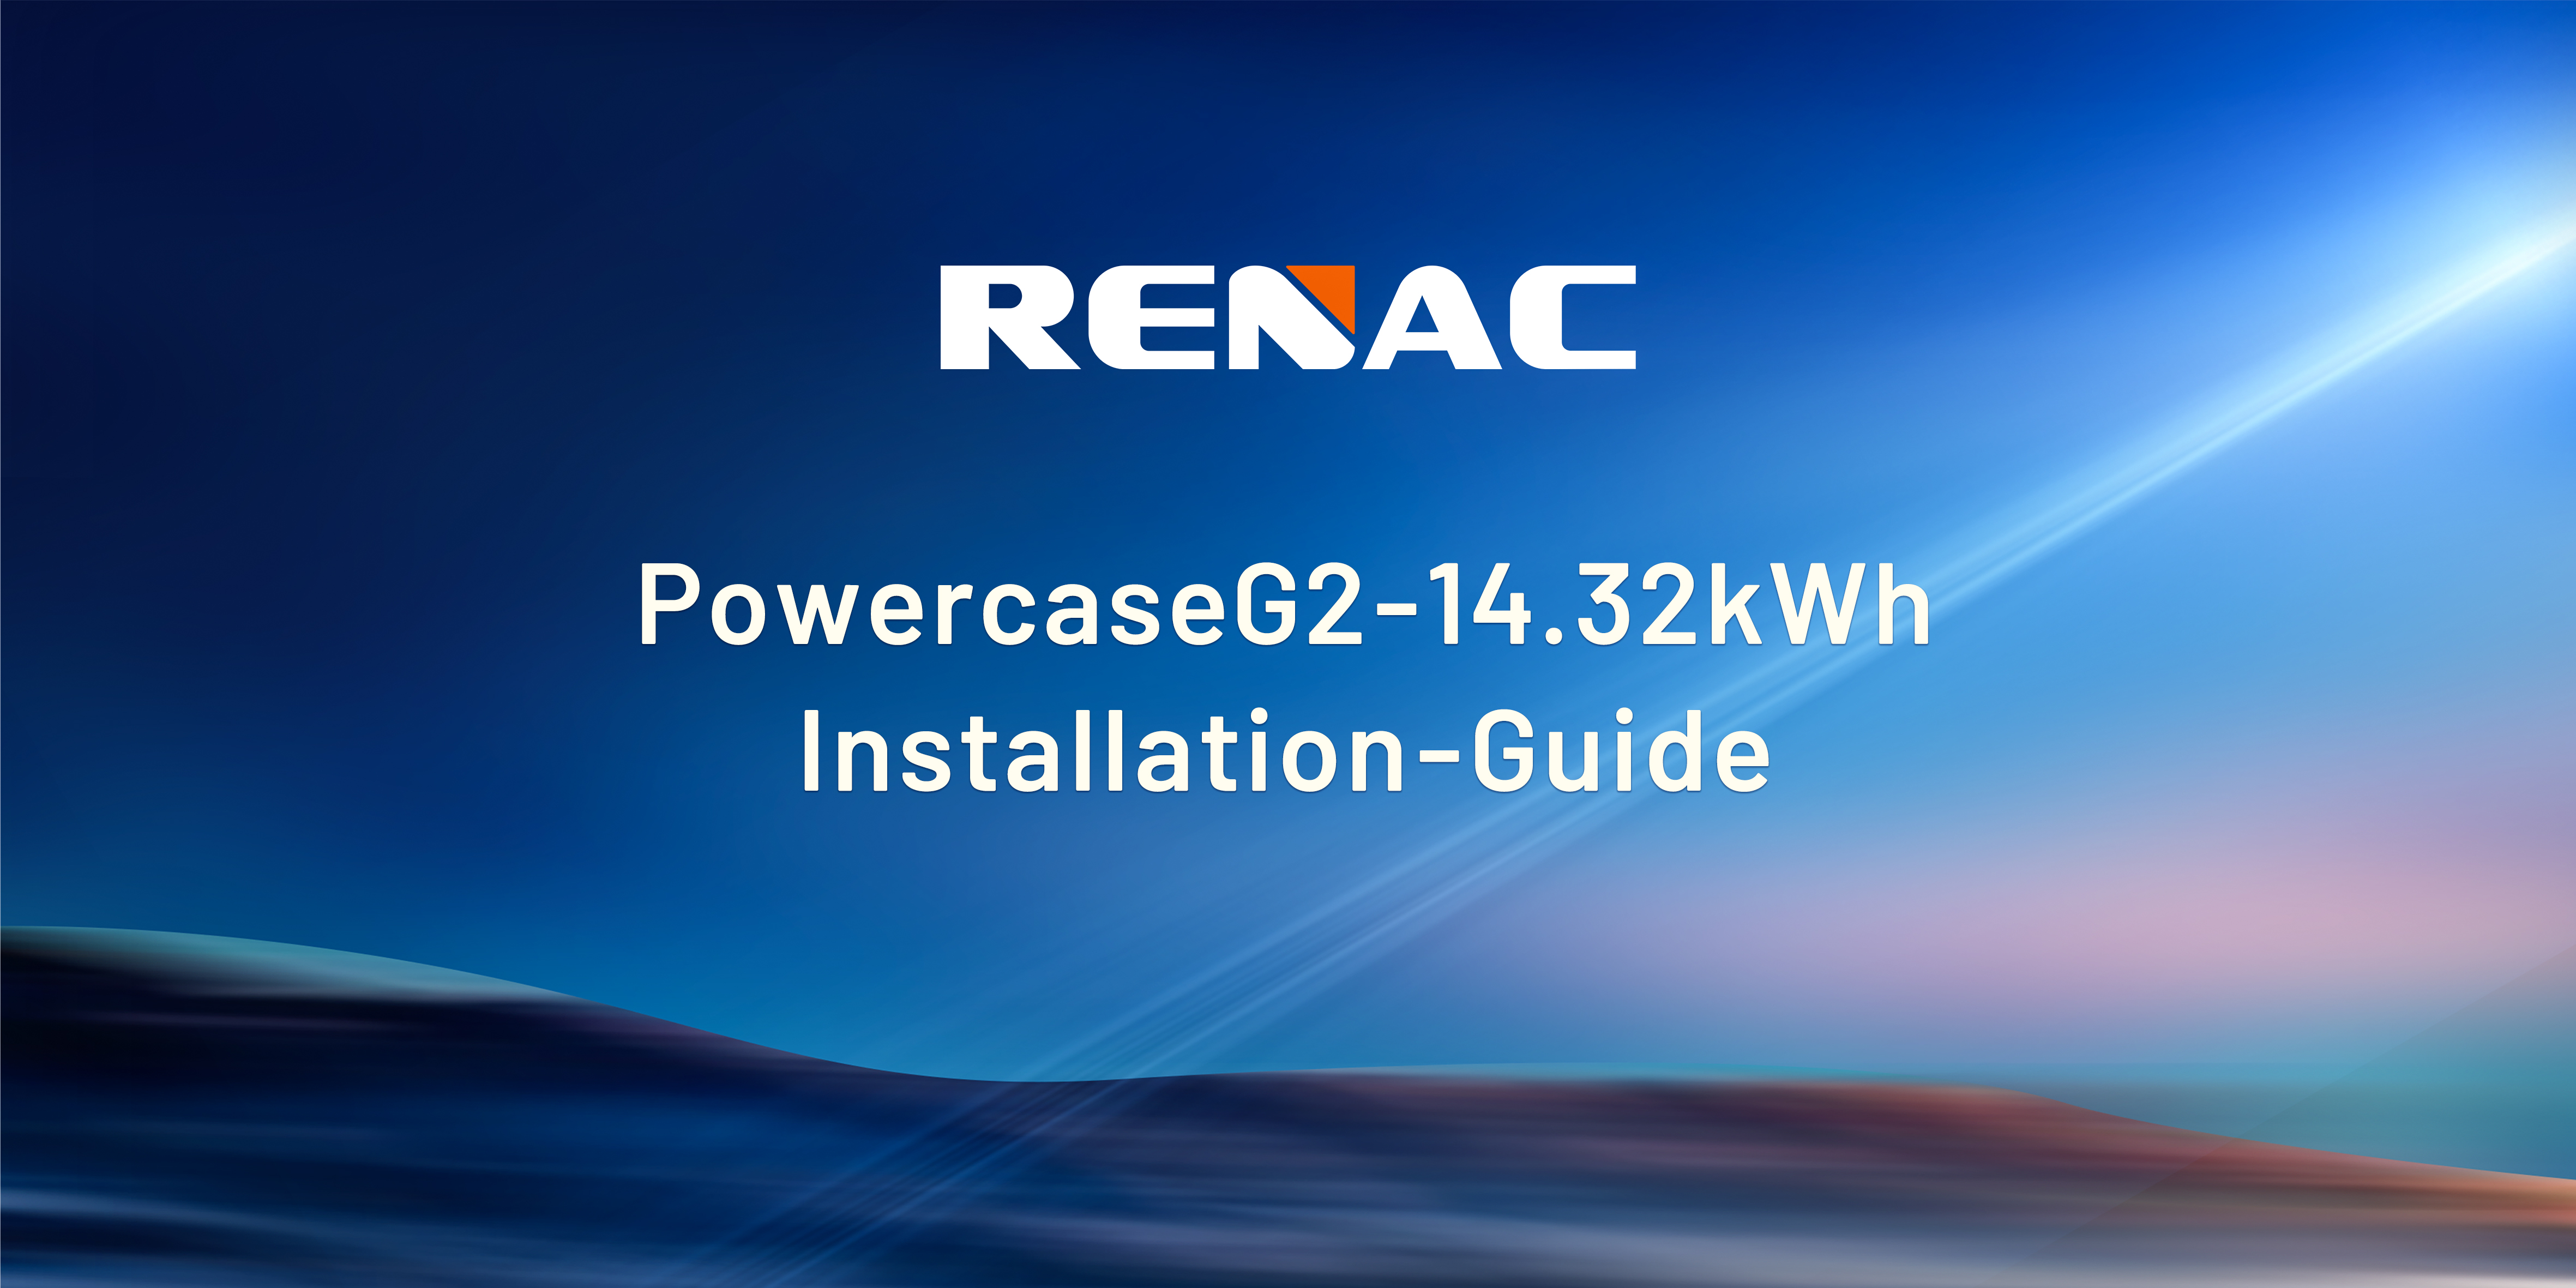 PowercaseG2-14.32kWh Installation-Guide